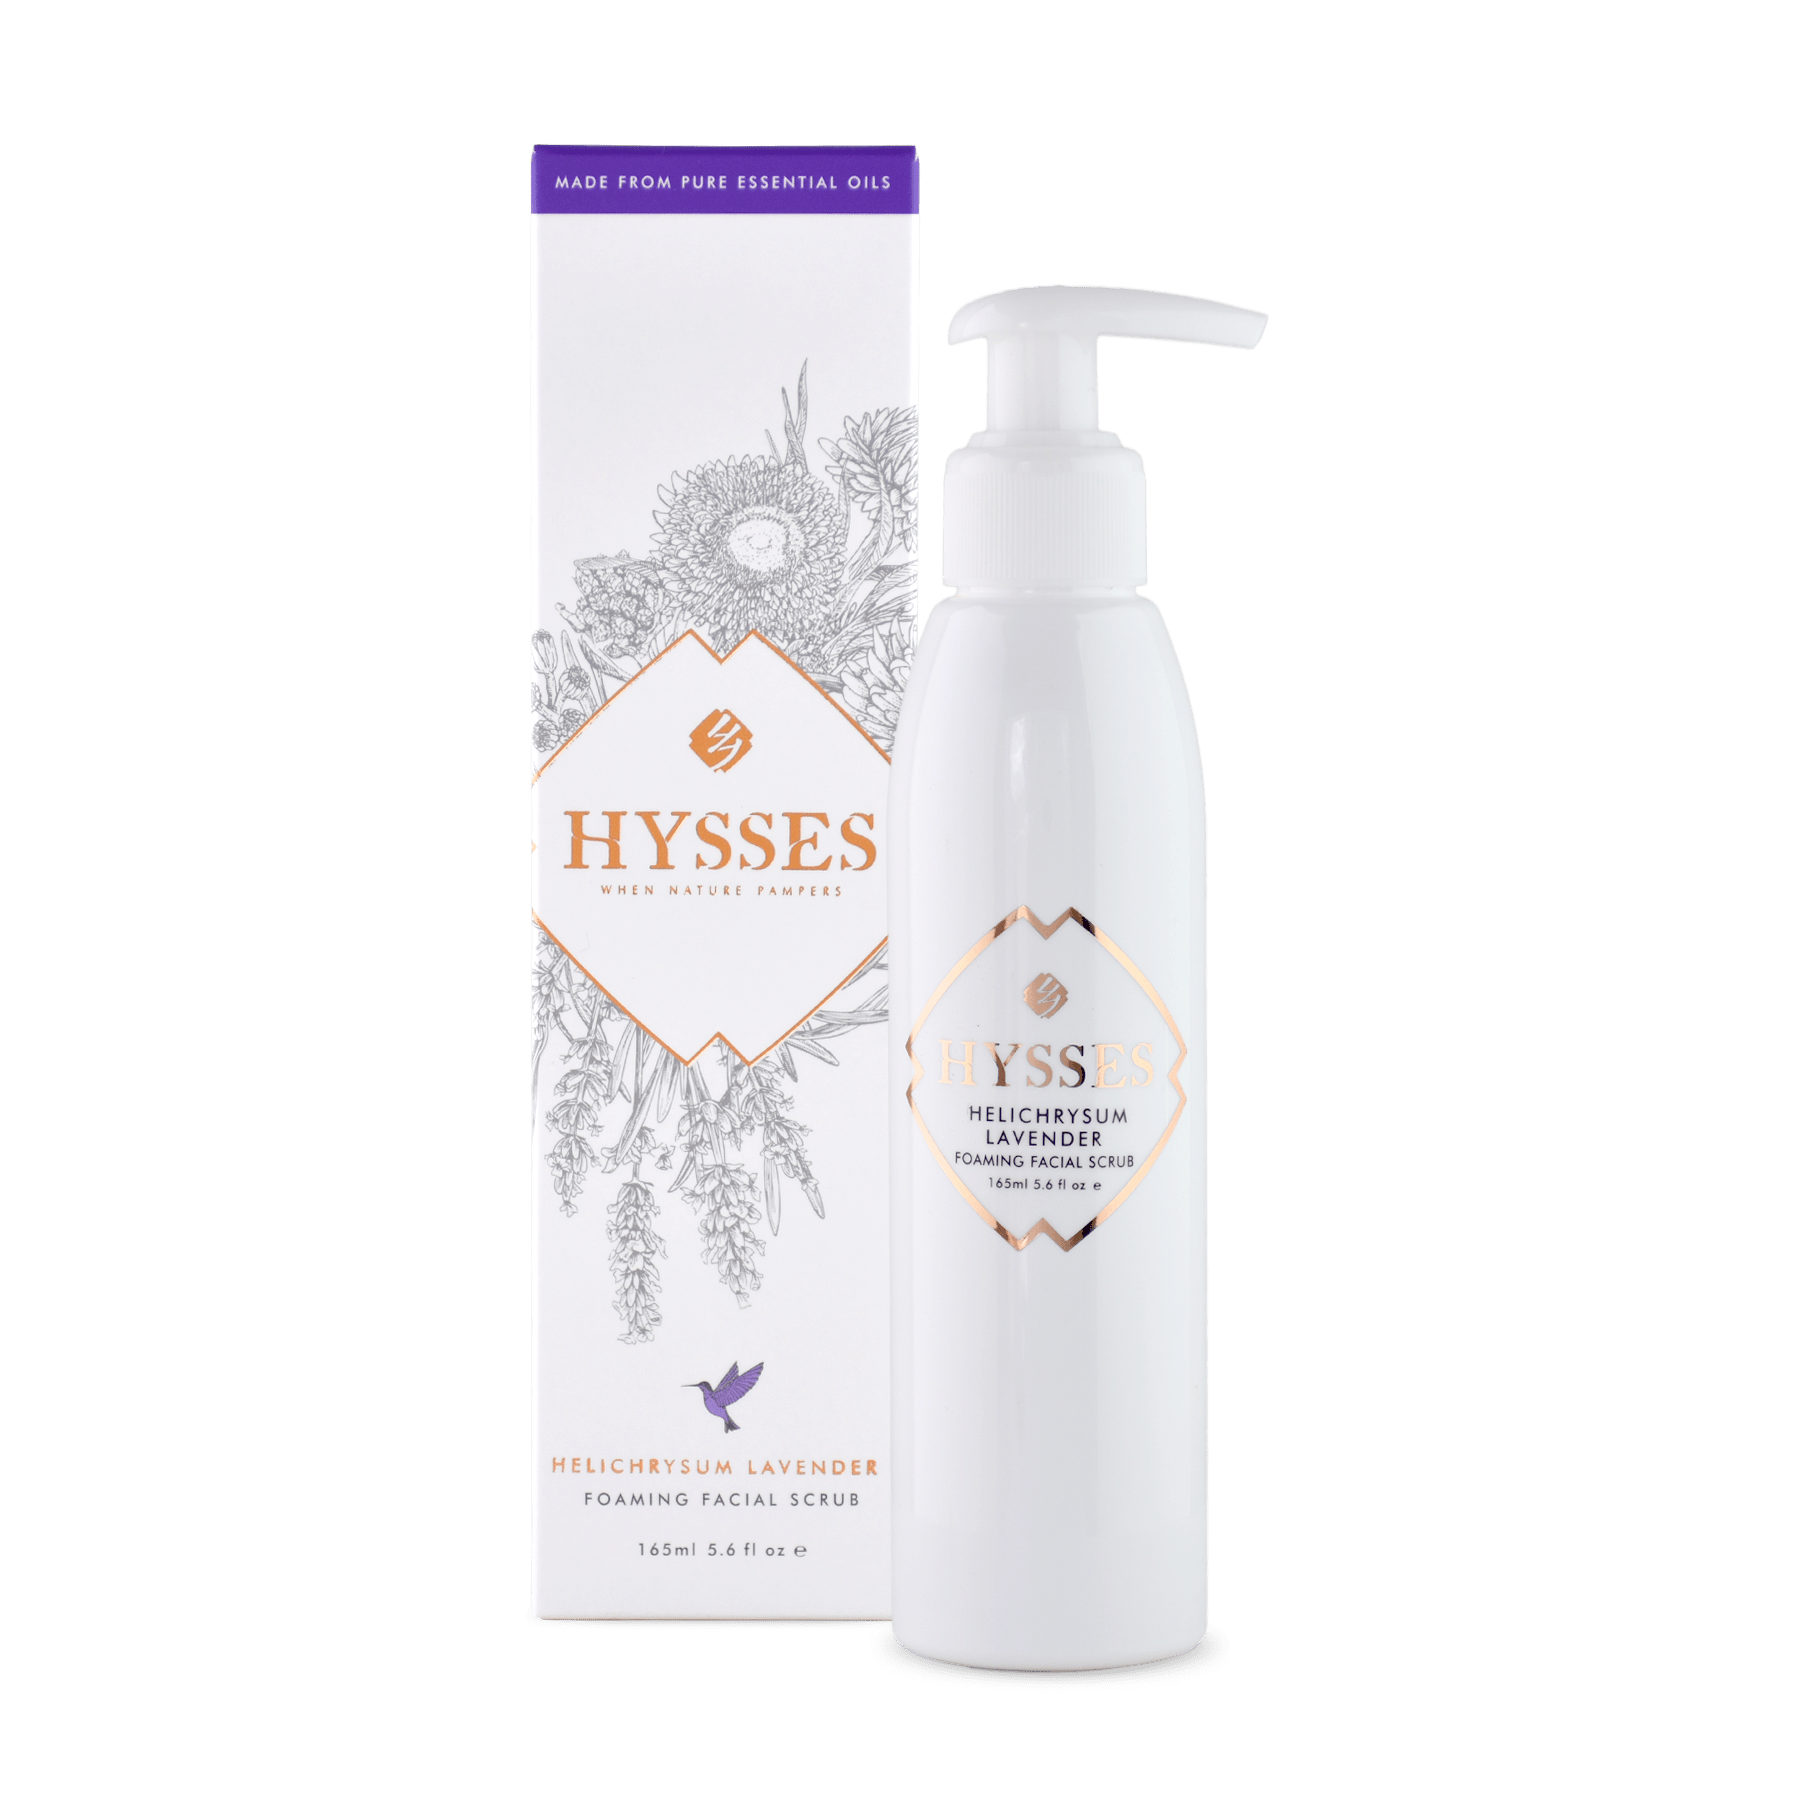 Hysses Face Care Facial Scrub Foaming Helichrysum Lavender